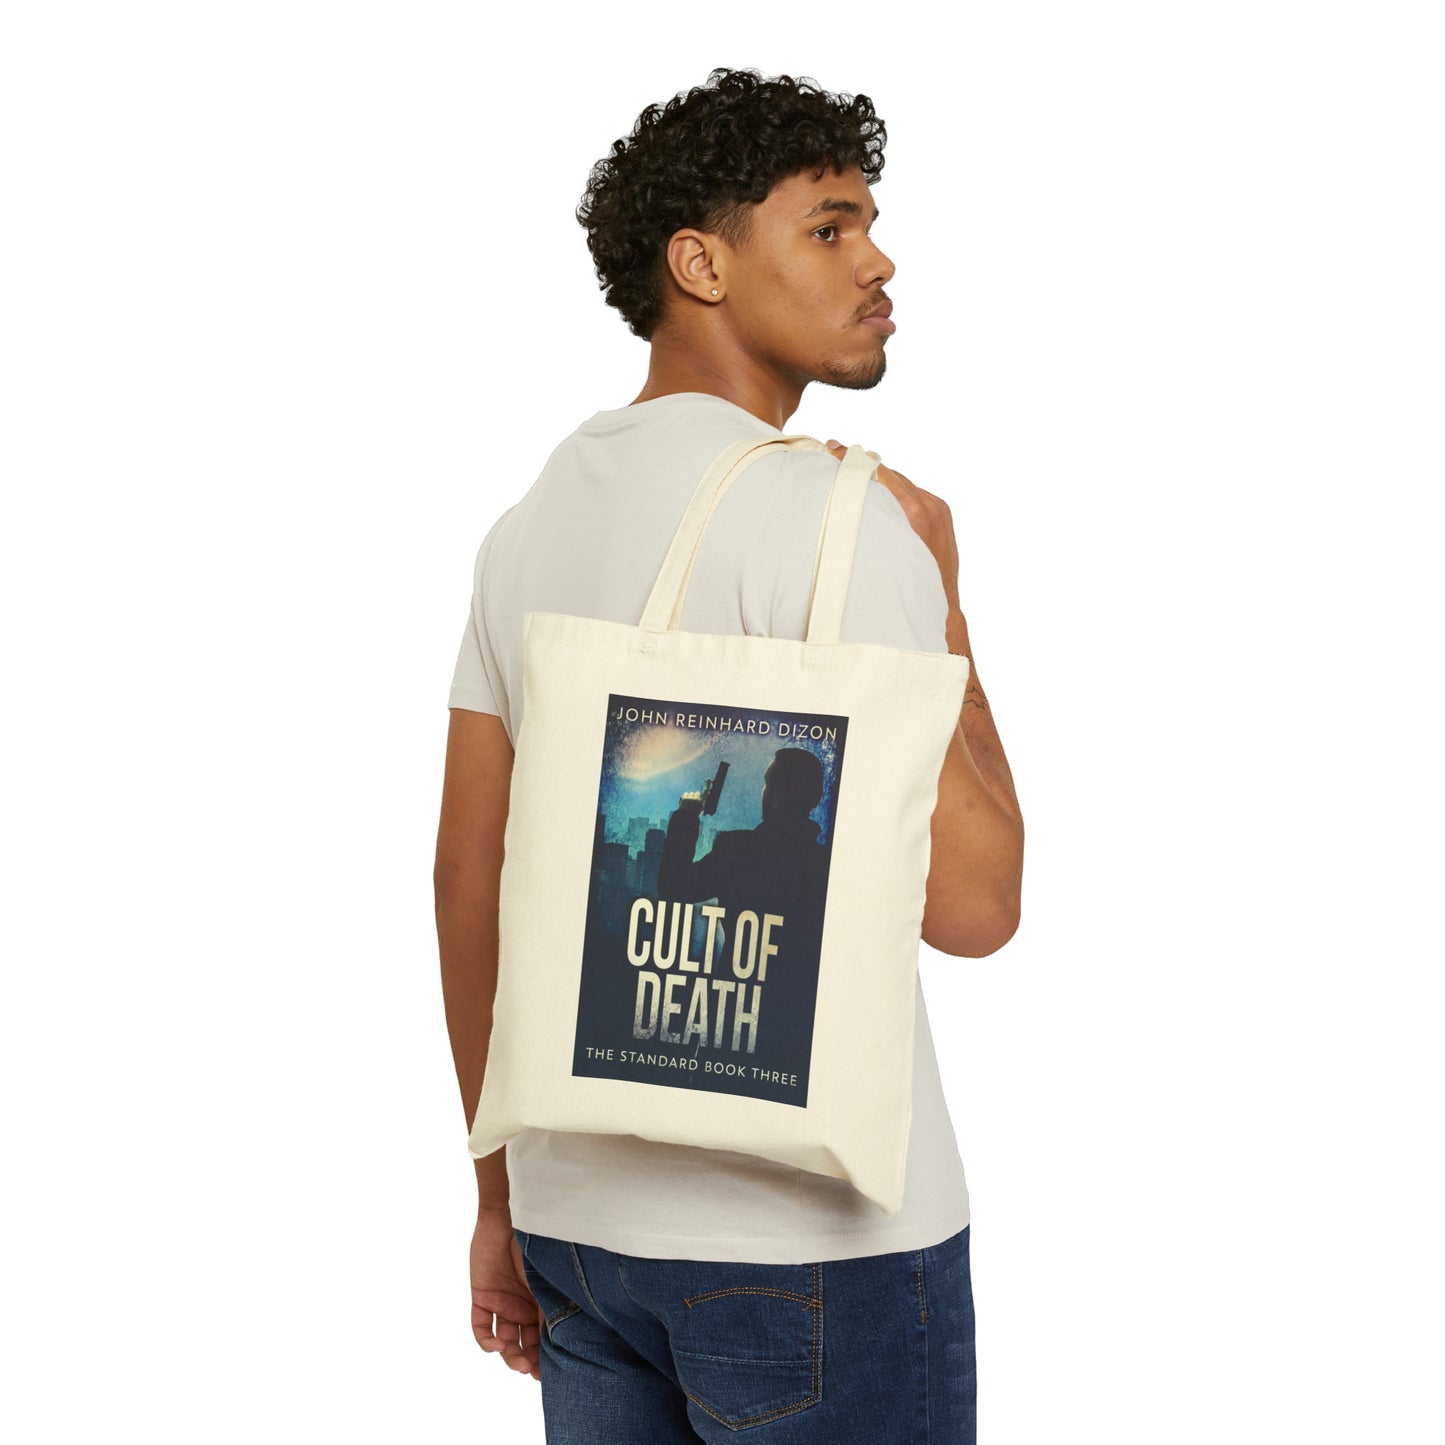 Cult Of Death - Cotton Canvas Tote Bag